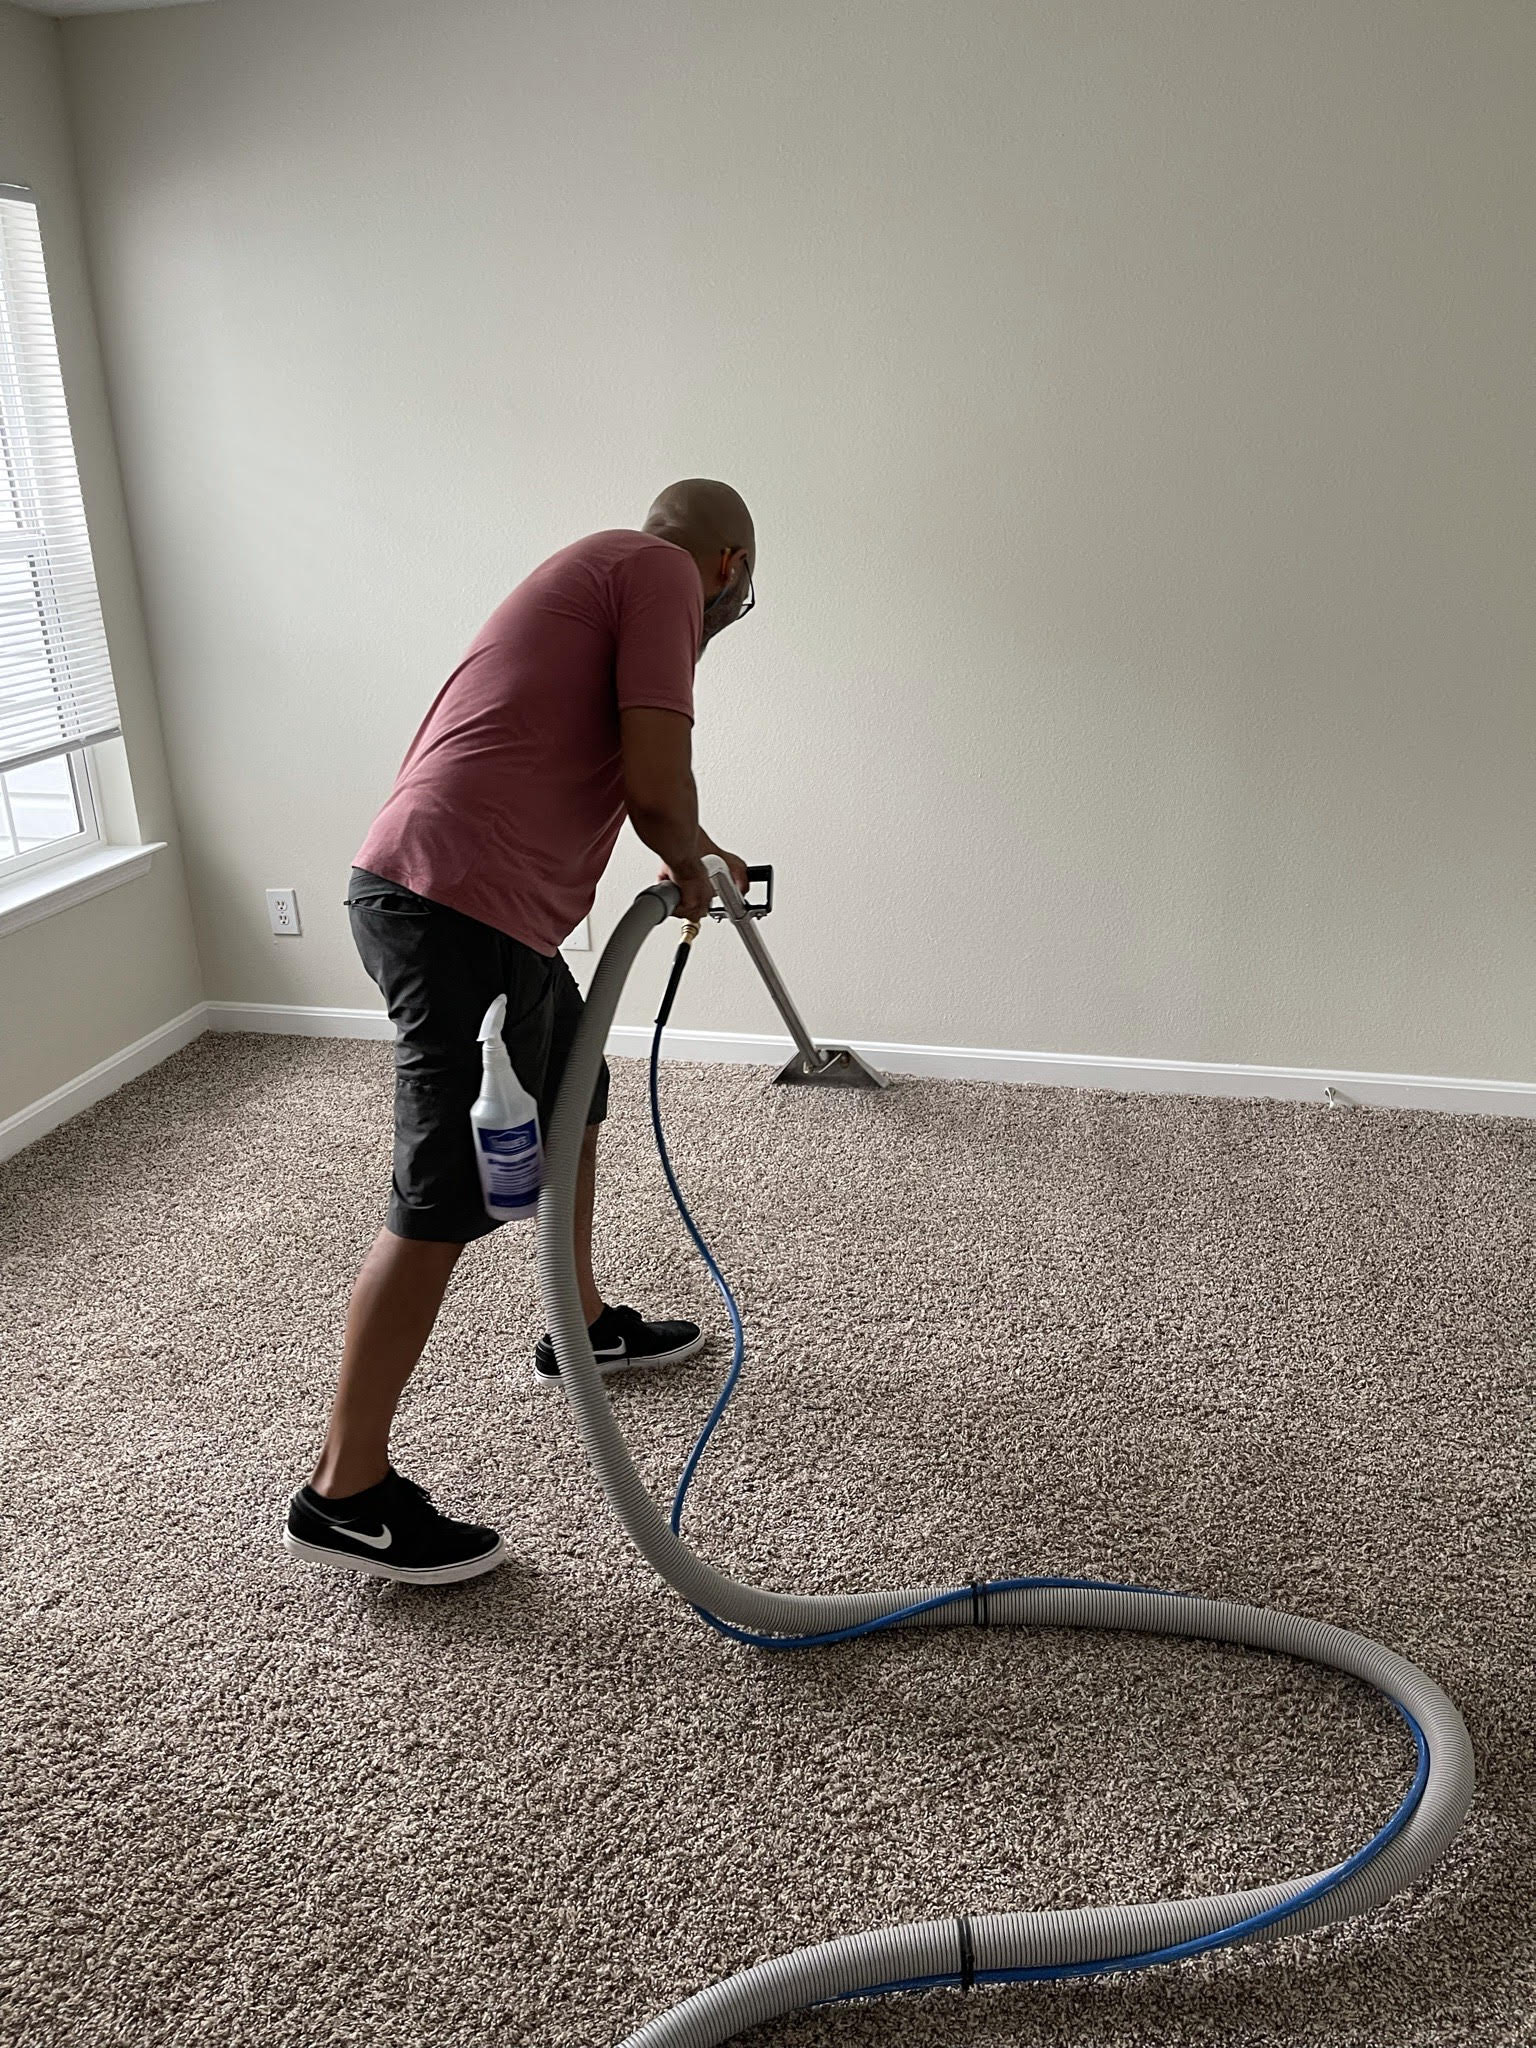 technician carpet cleaning a carpet